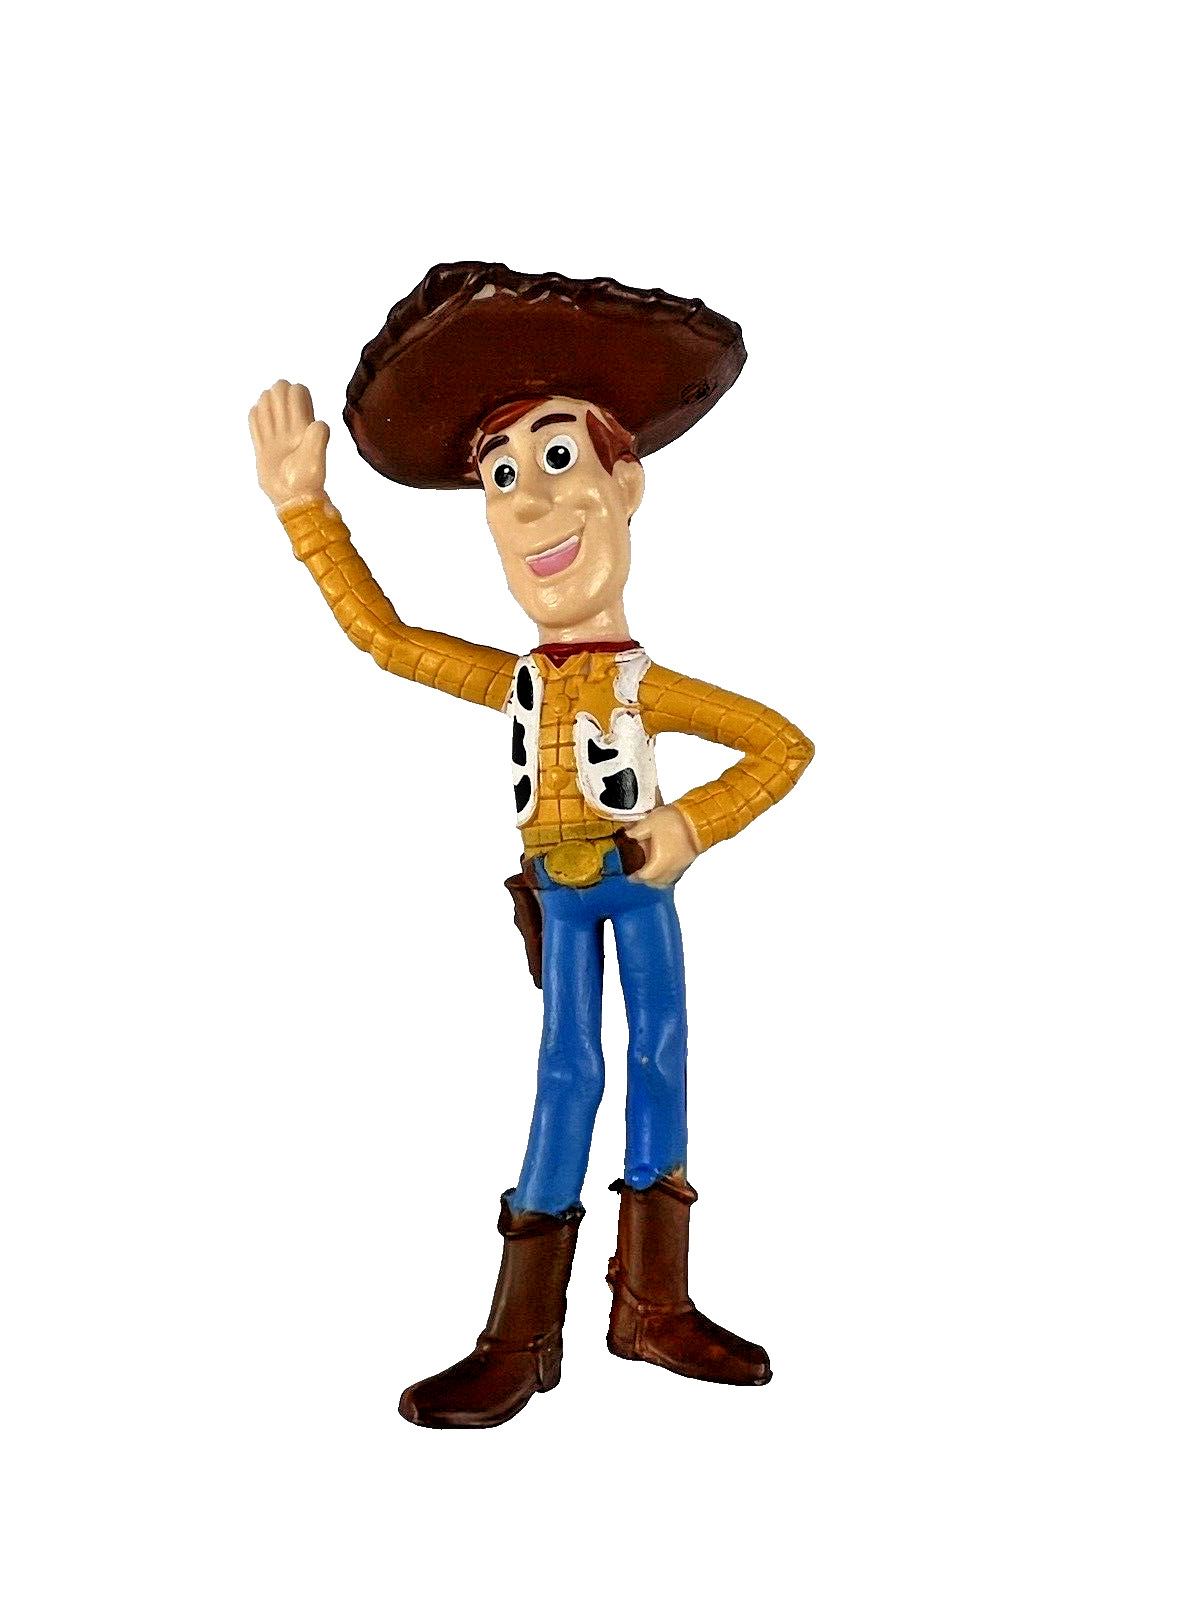 2021 Disney Pixar Toy Story Woody McDonalds Action Figure 4"